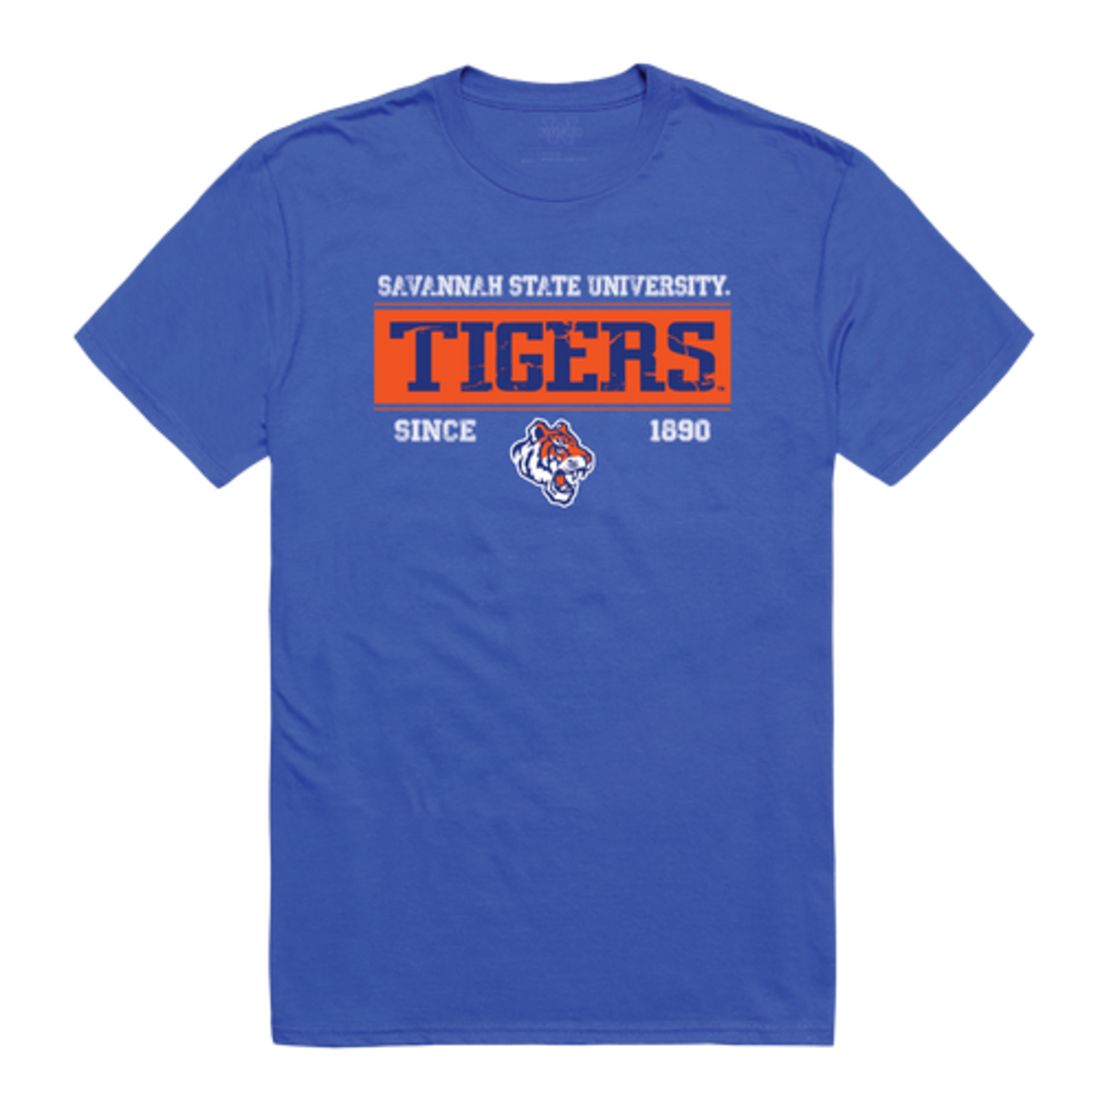 Savannah State University Tigers Established T-Shirt